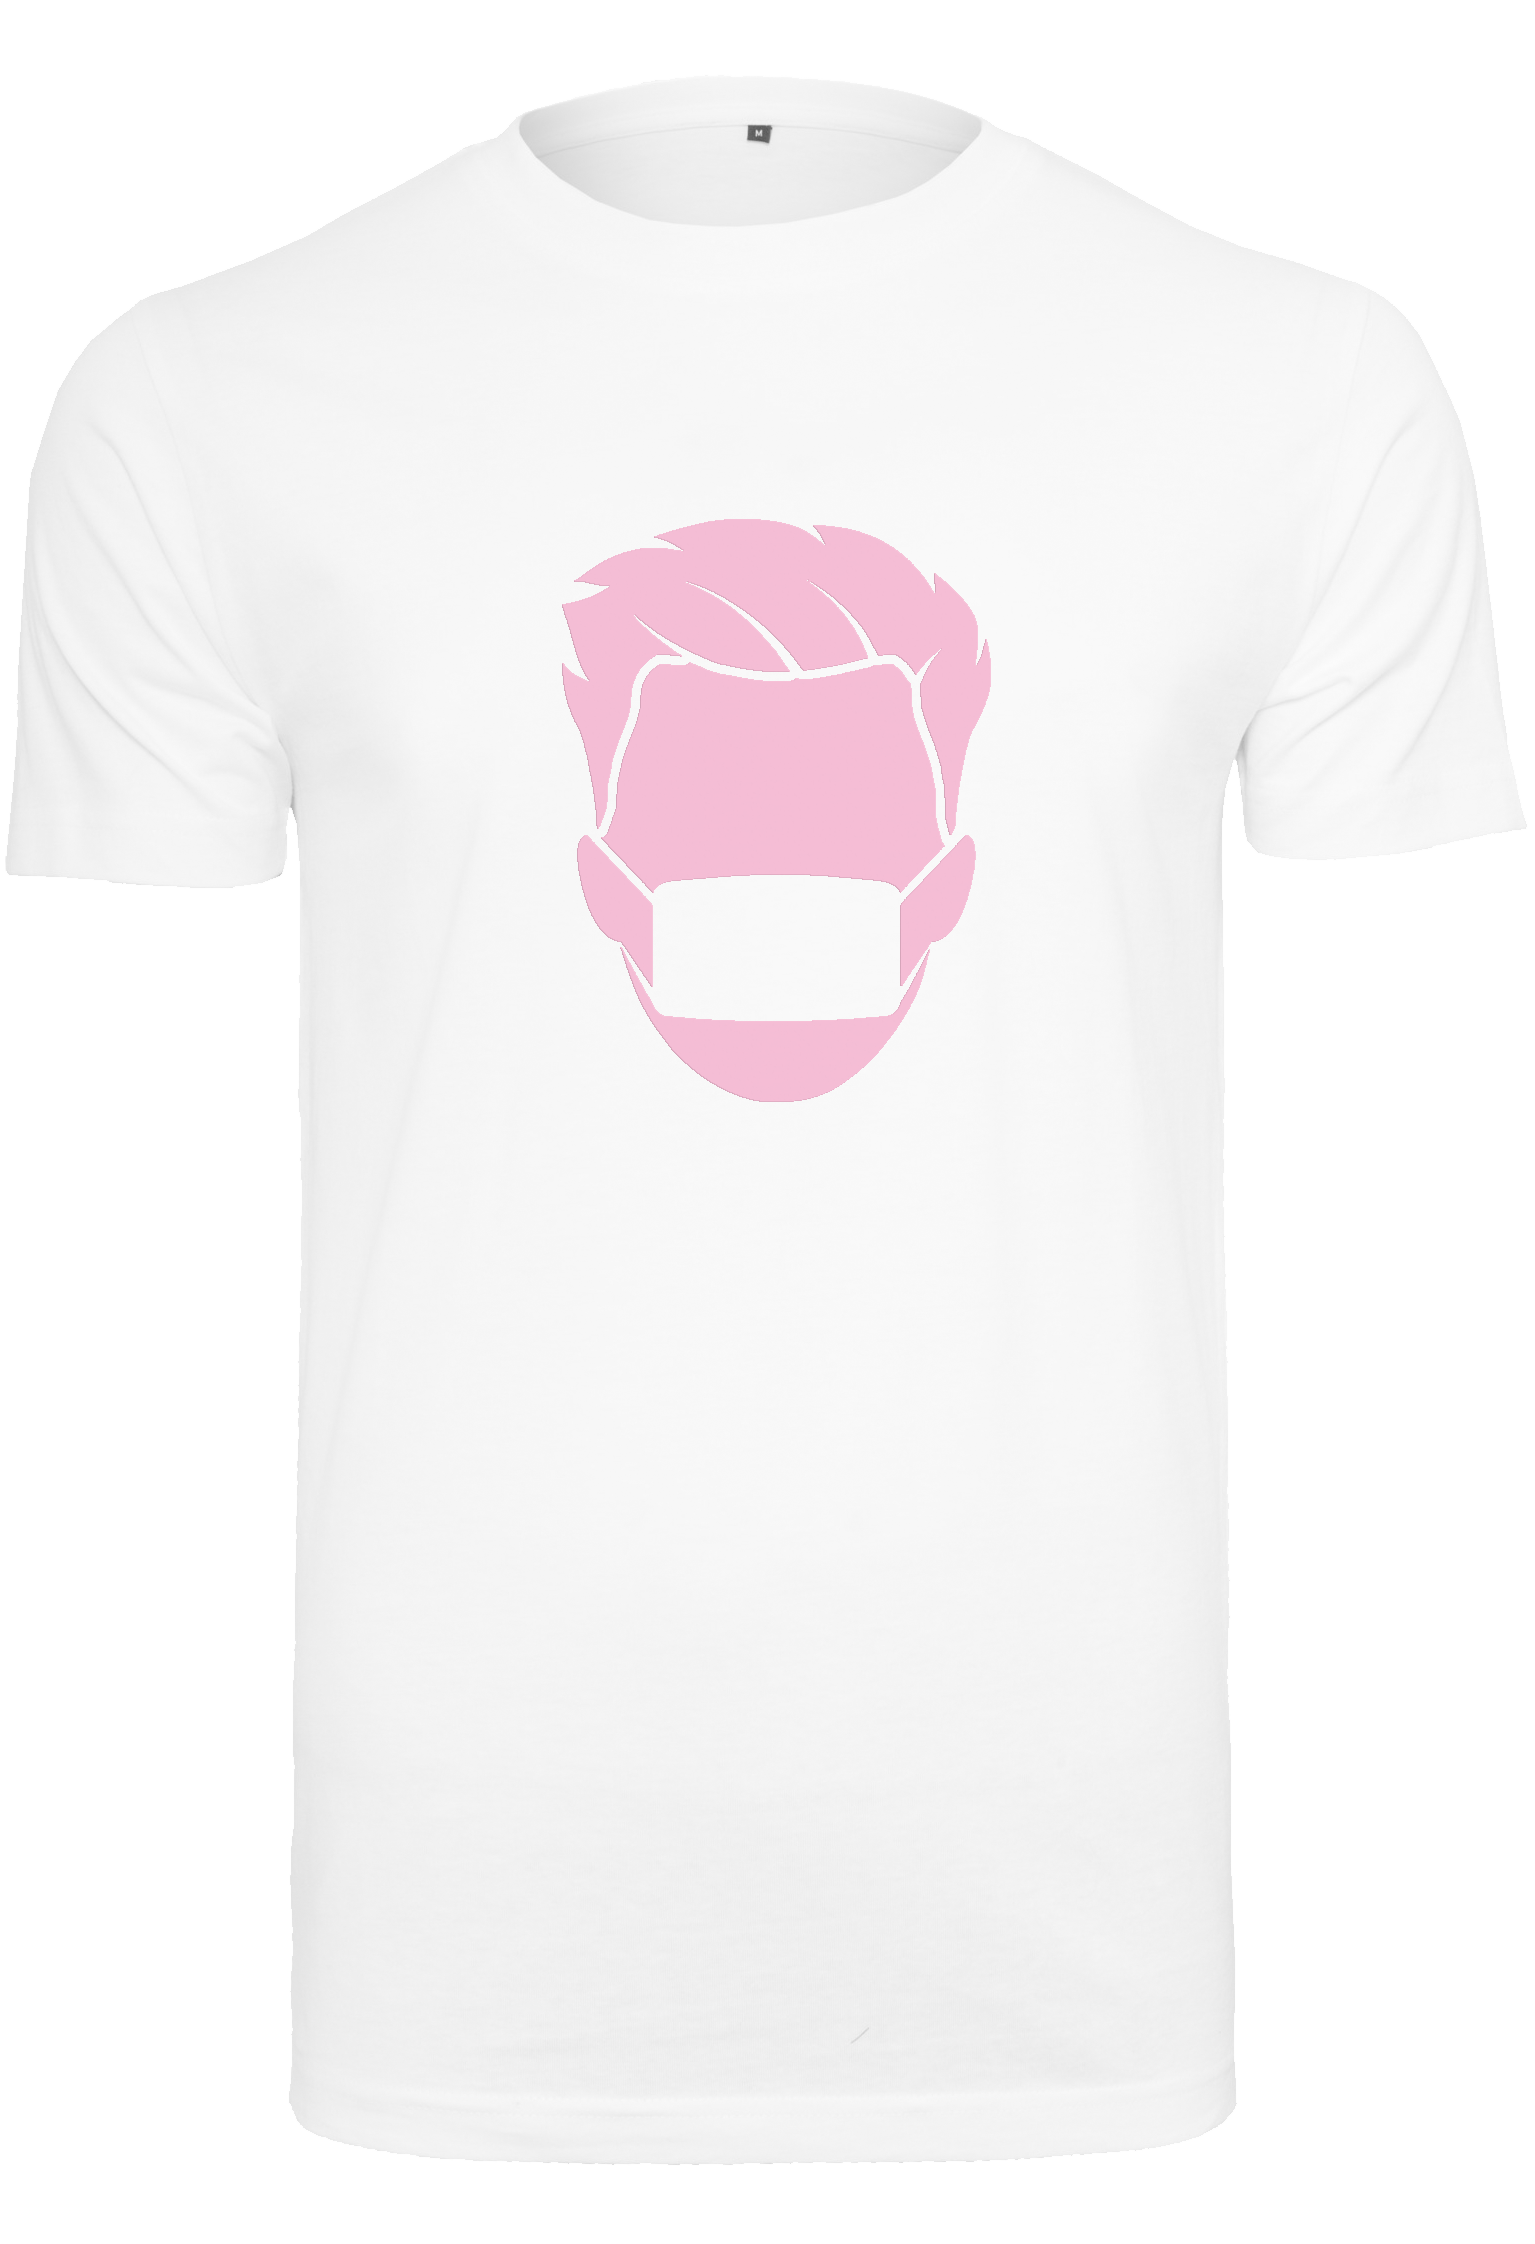 Pinkerda white T-Shirt